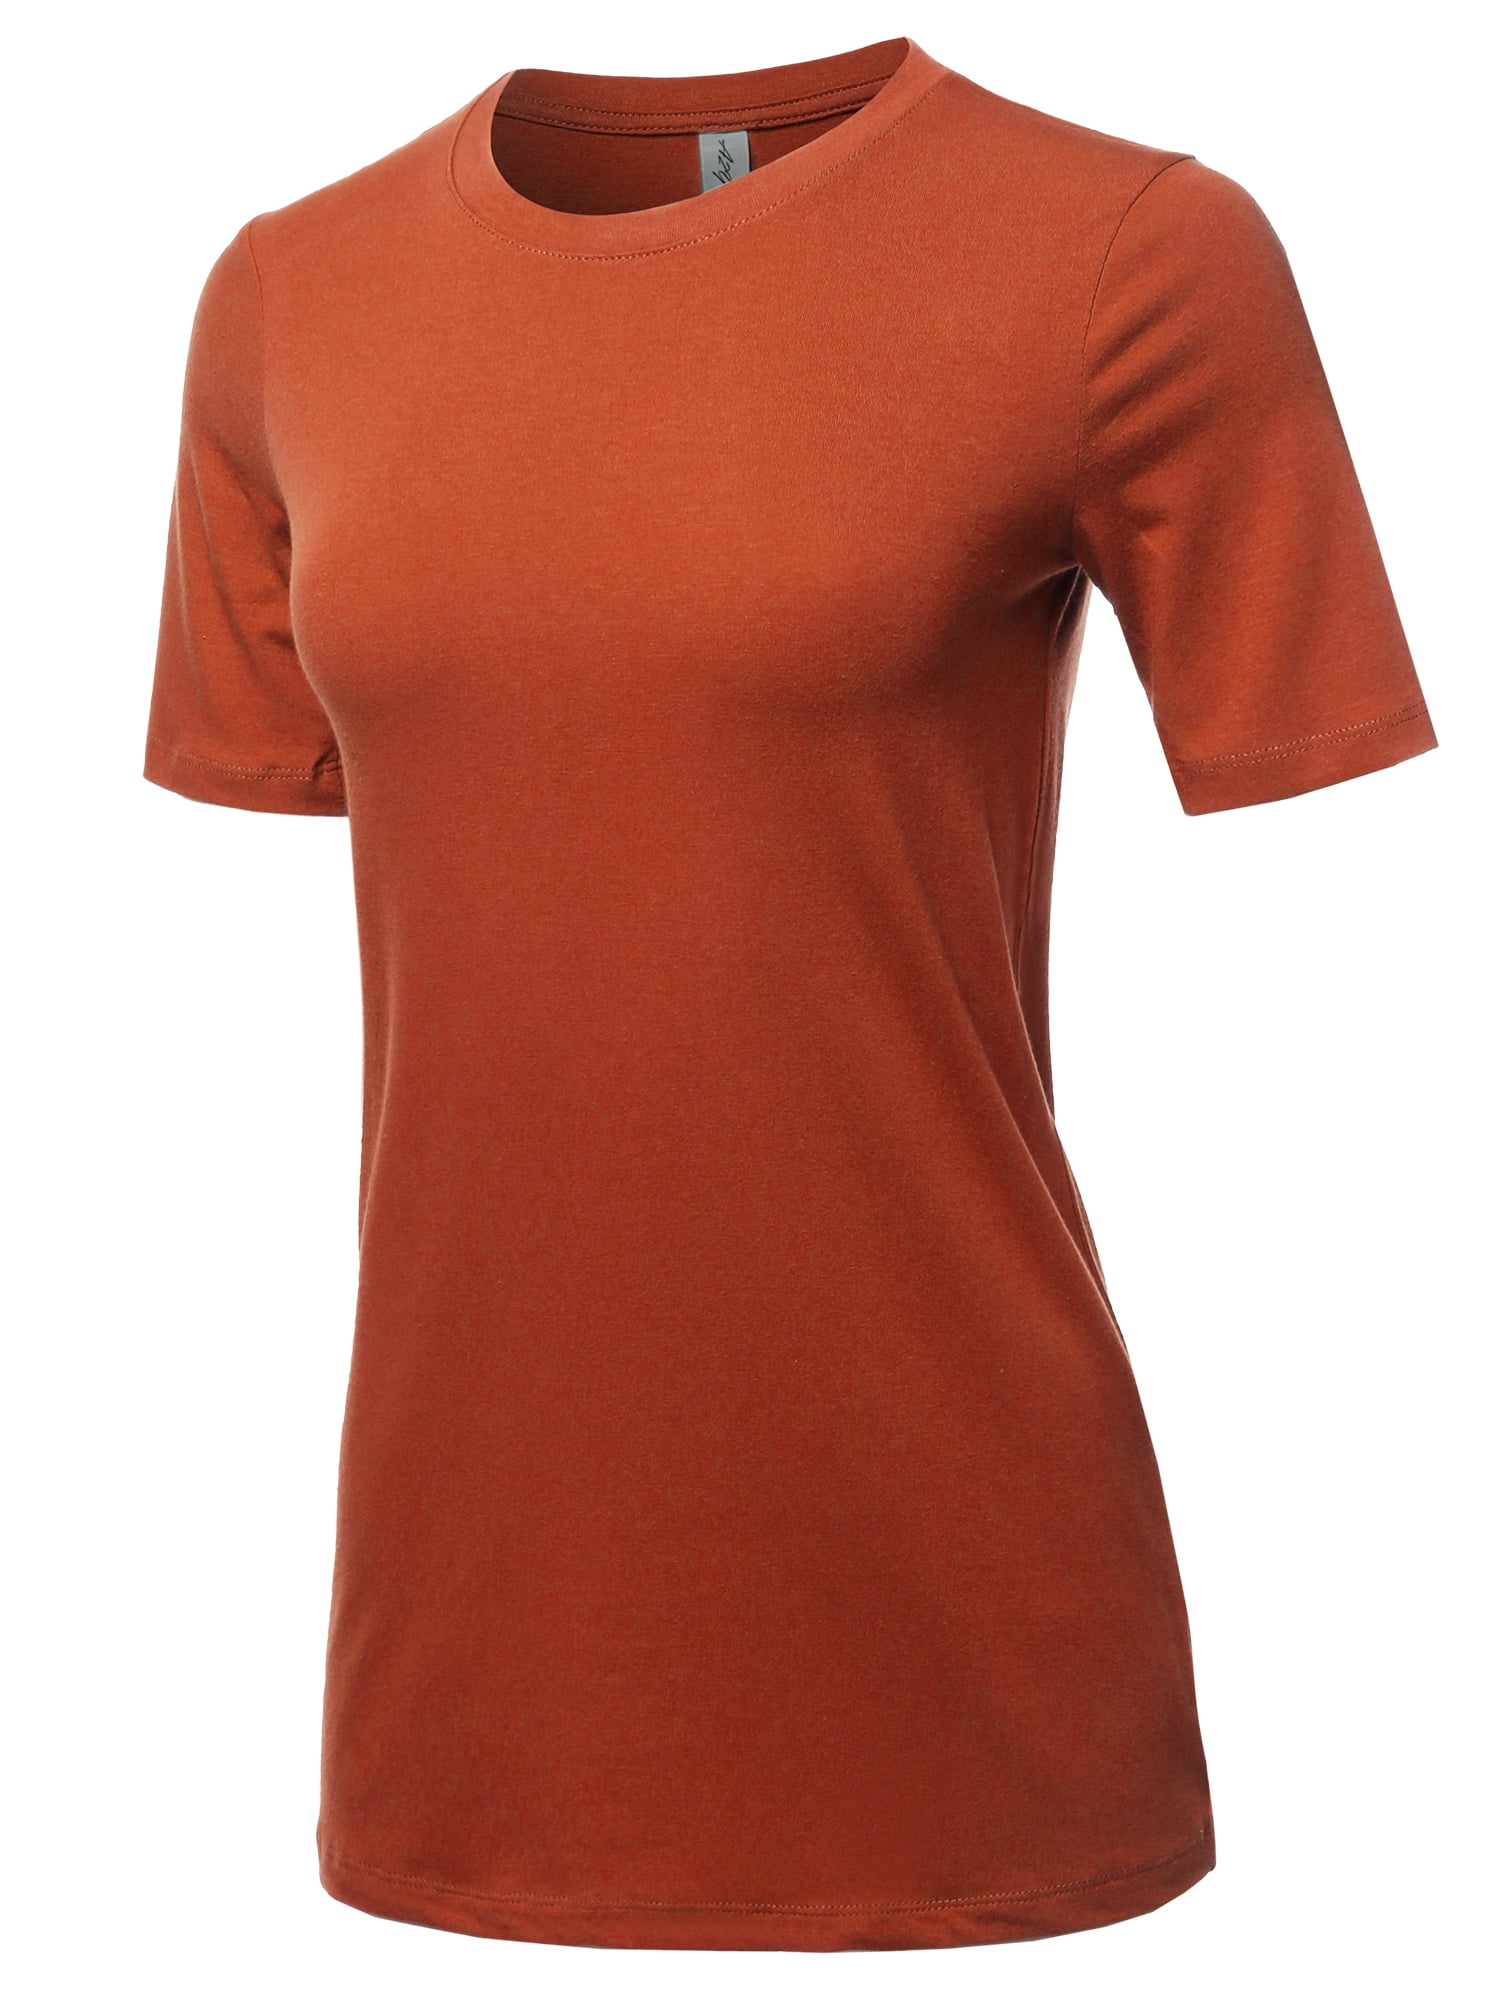 discount 67% Essentials MO T-shirt Navy Blue/Gray S WOMEN FASHION Shirts & T-shirts T-shirt Basic 